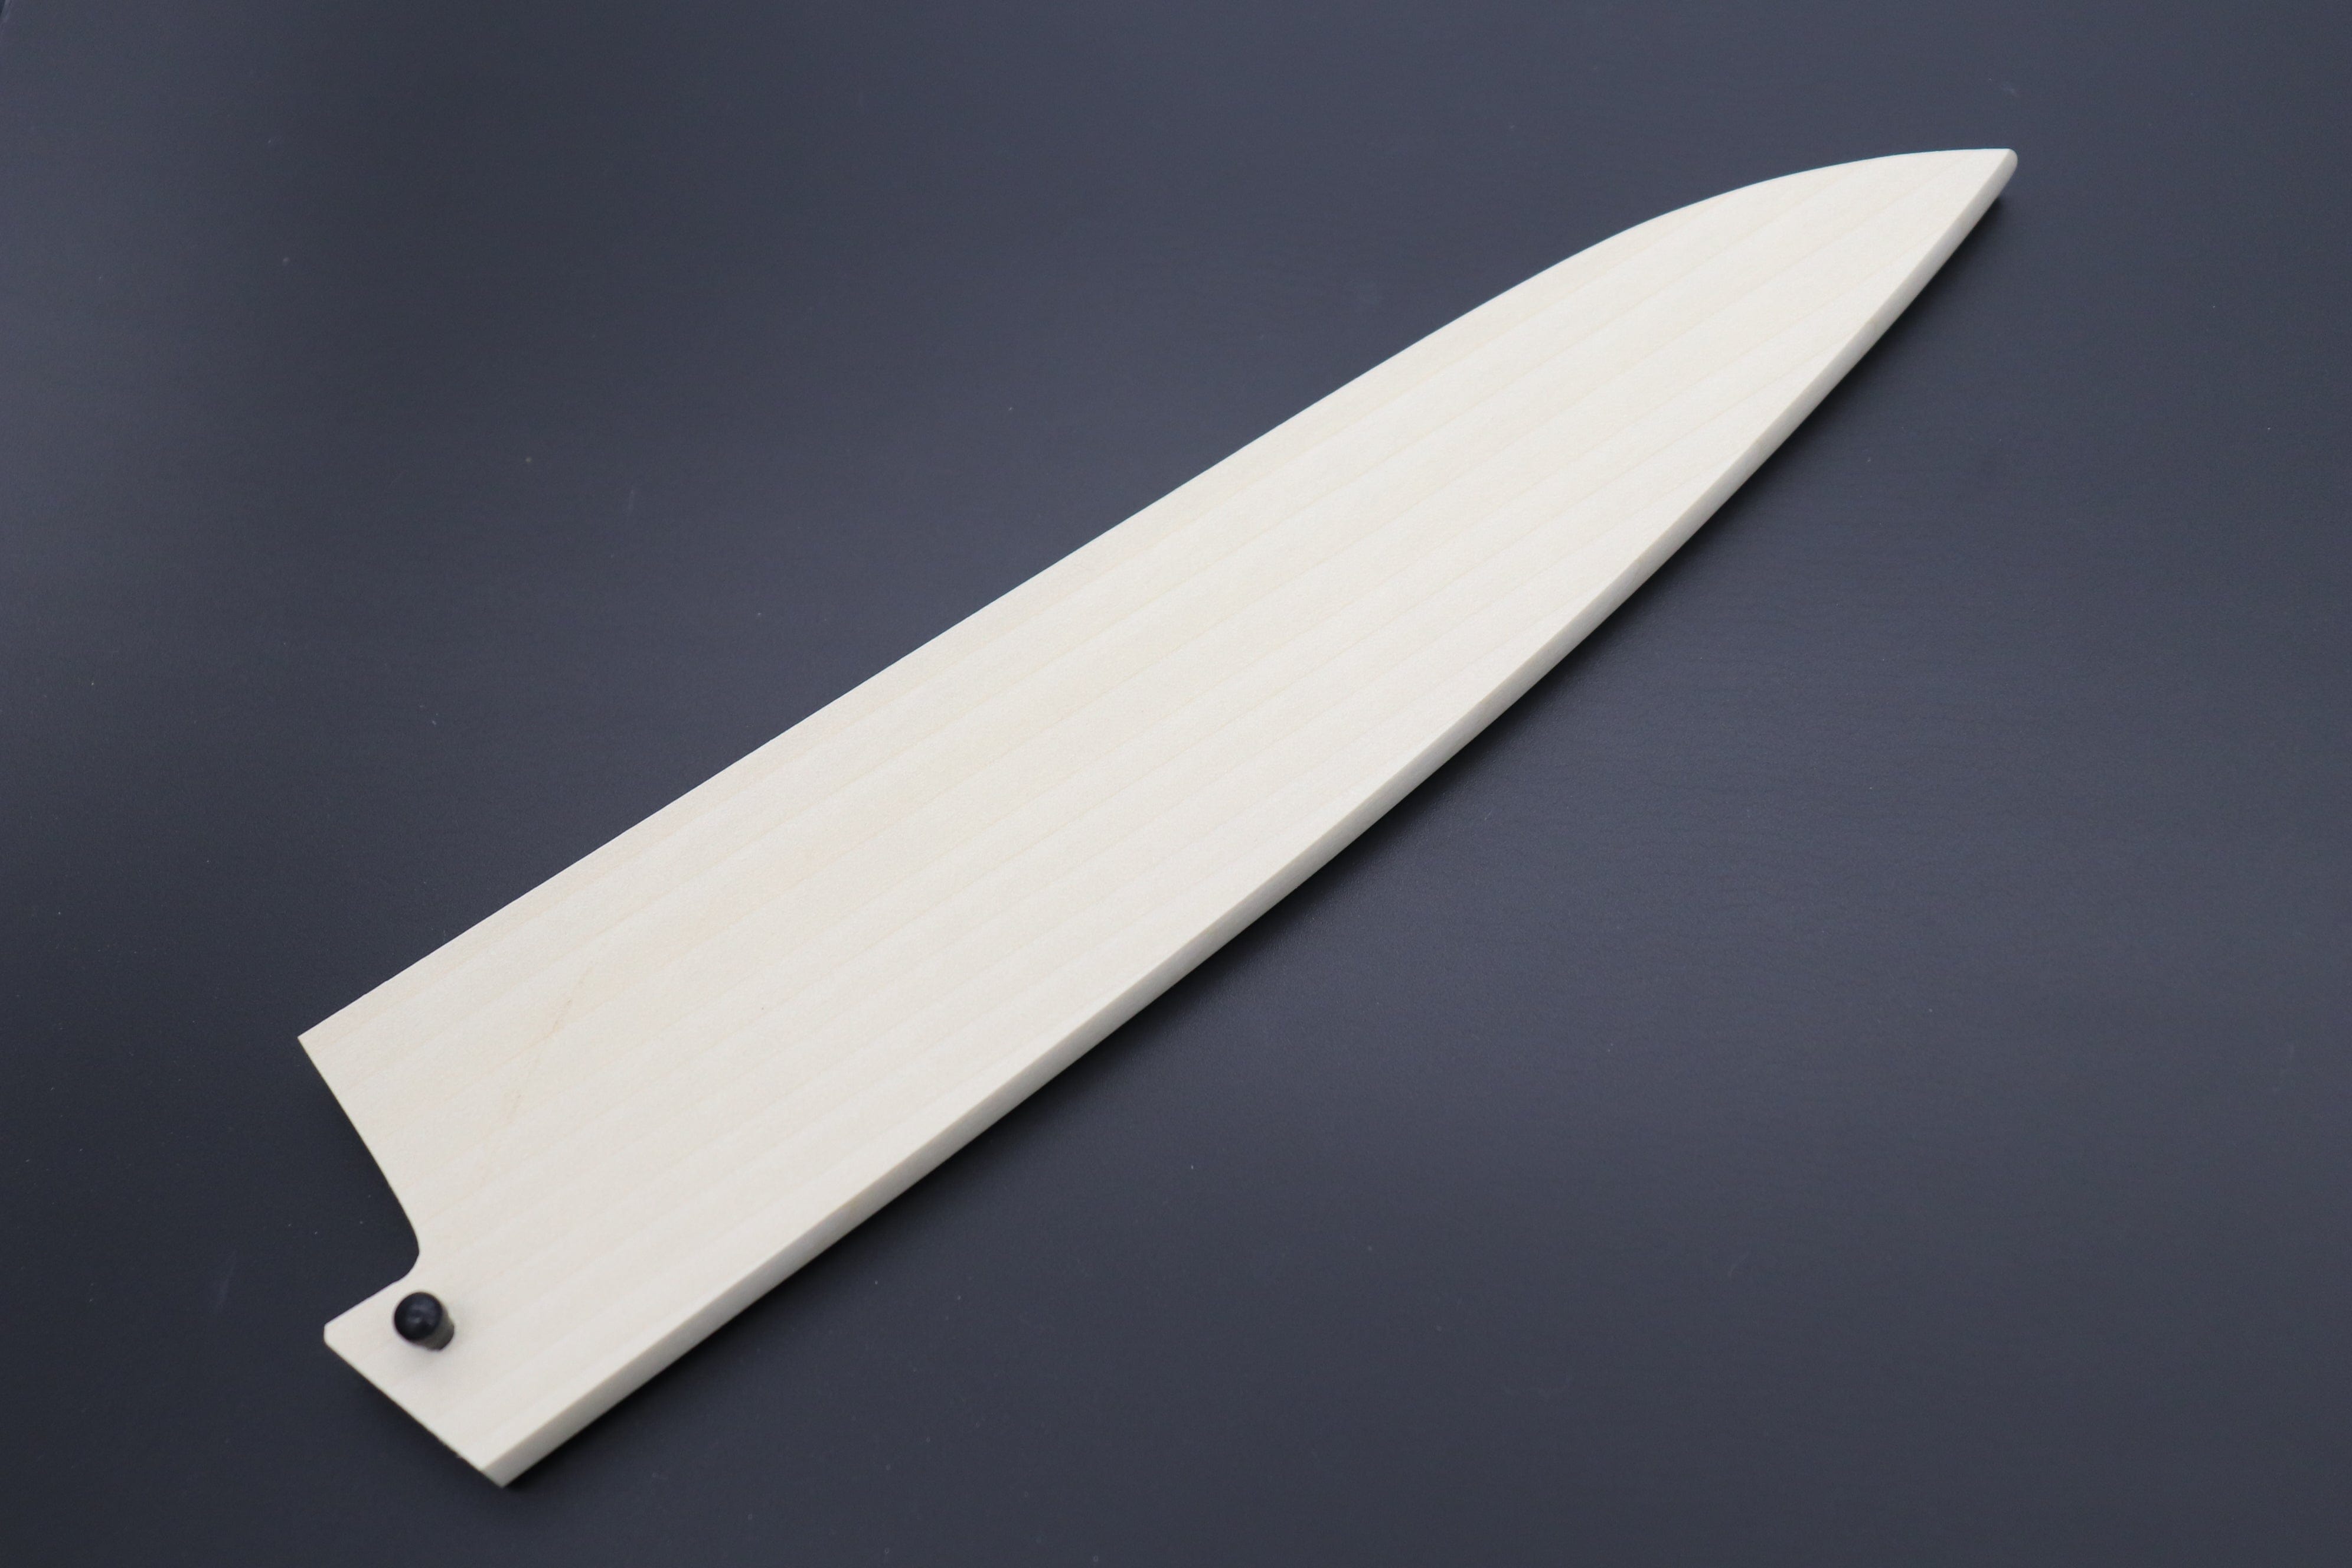 Saya Knife - Magnolia Wooden Sheath - Gyuto210mm